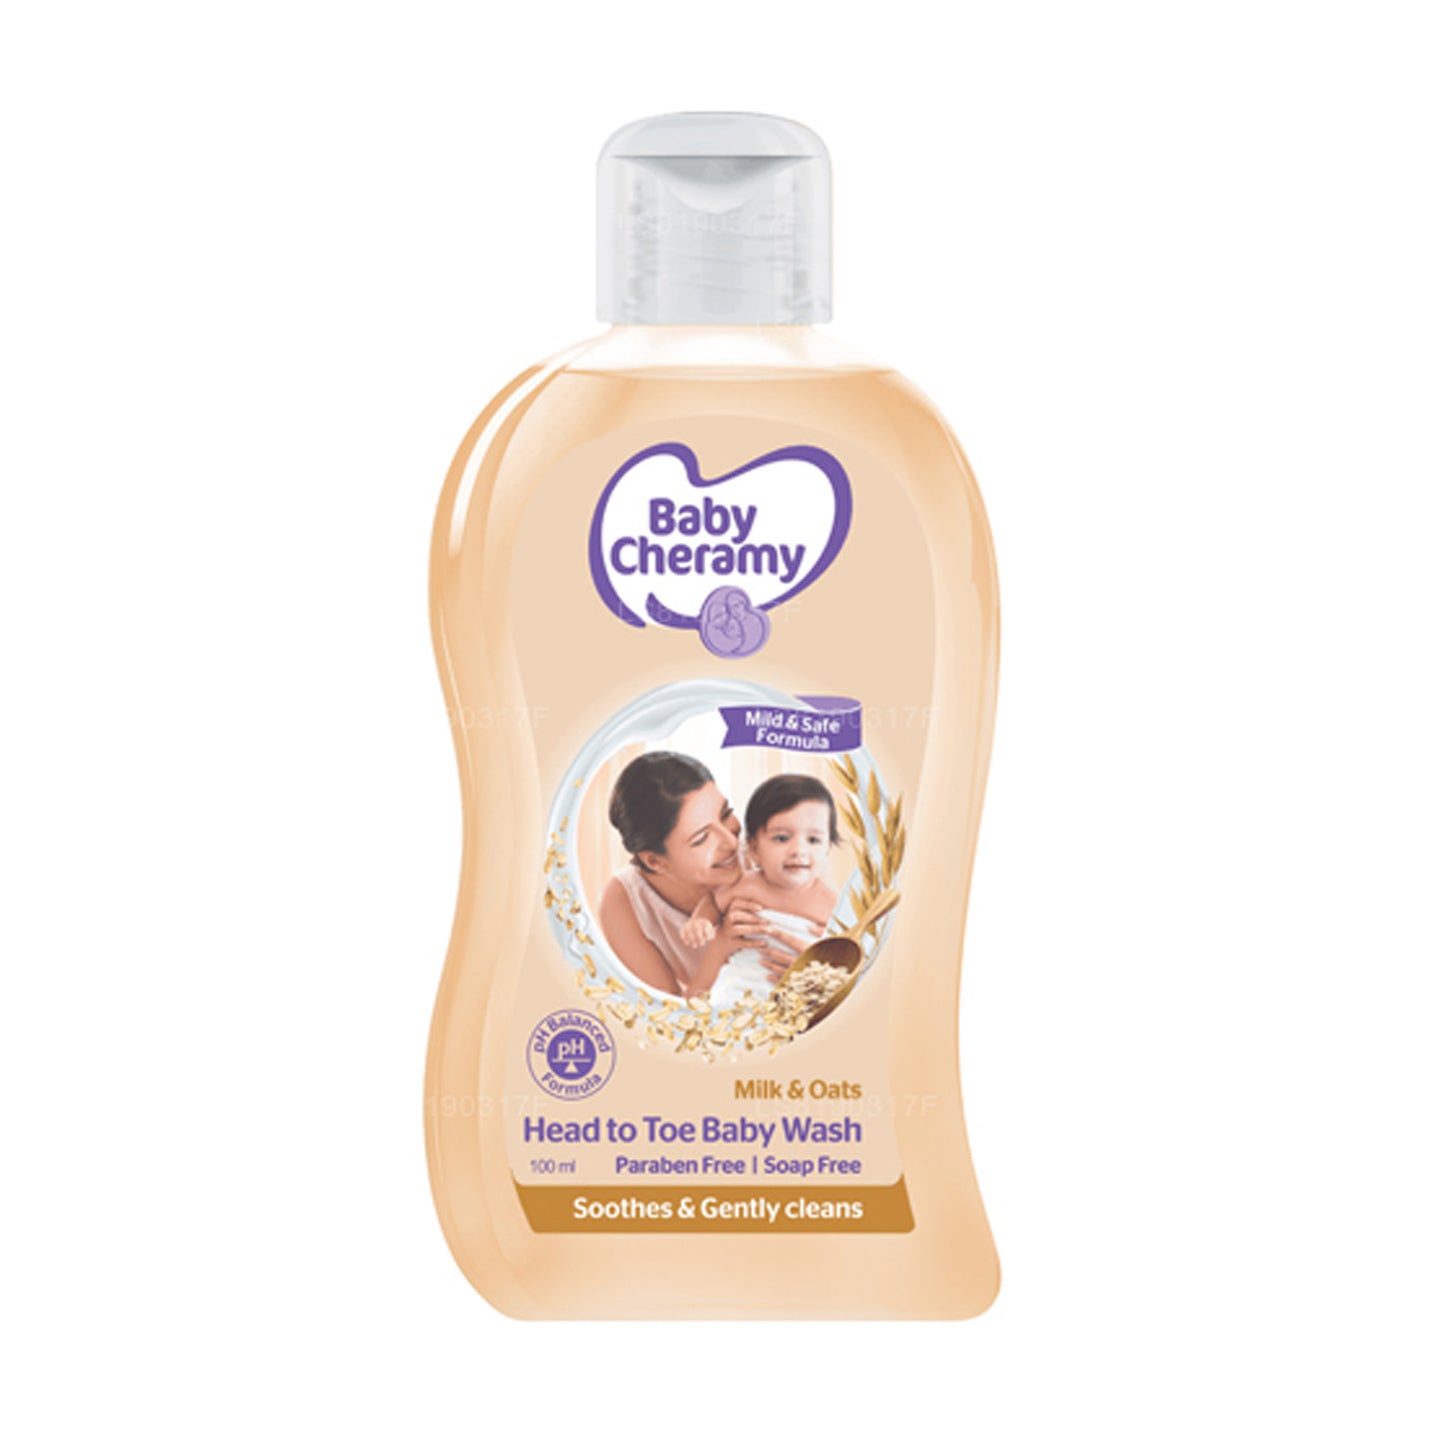 Jabón para bebés Baby Cheramy de pies a cabeza (100 ml)